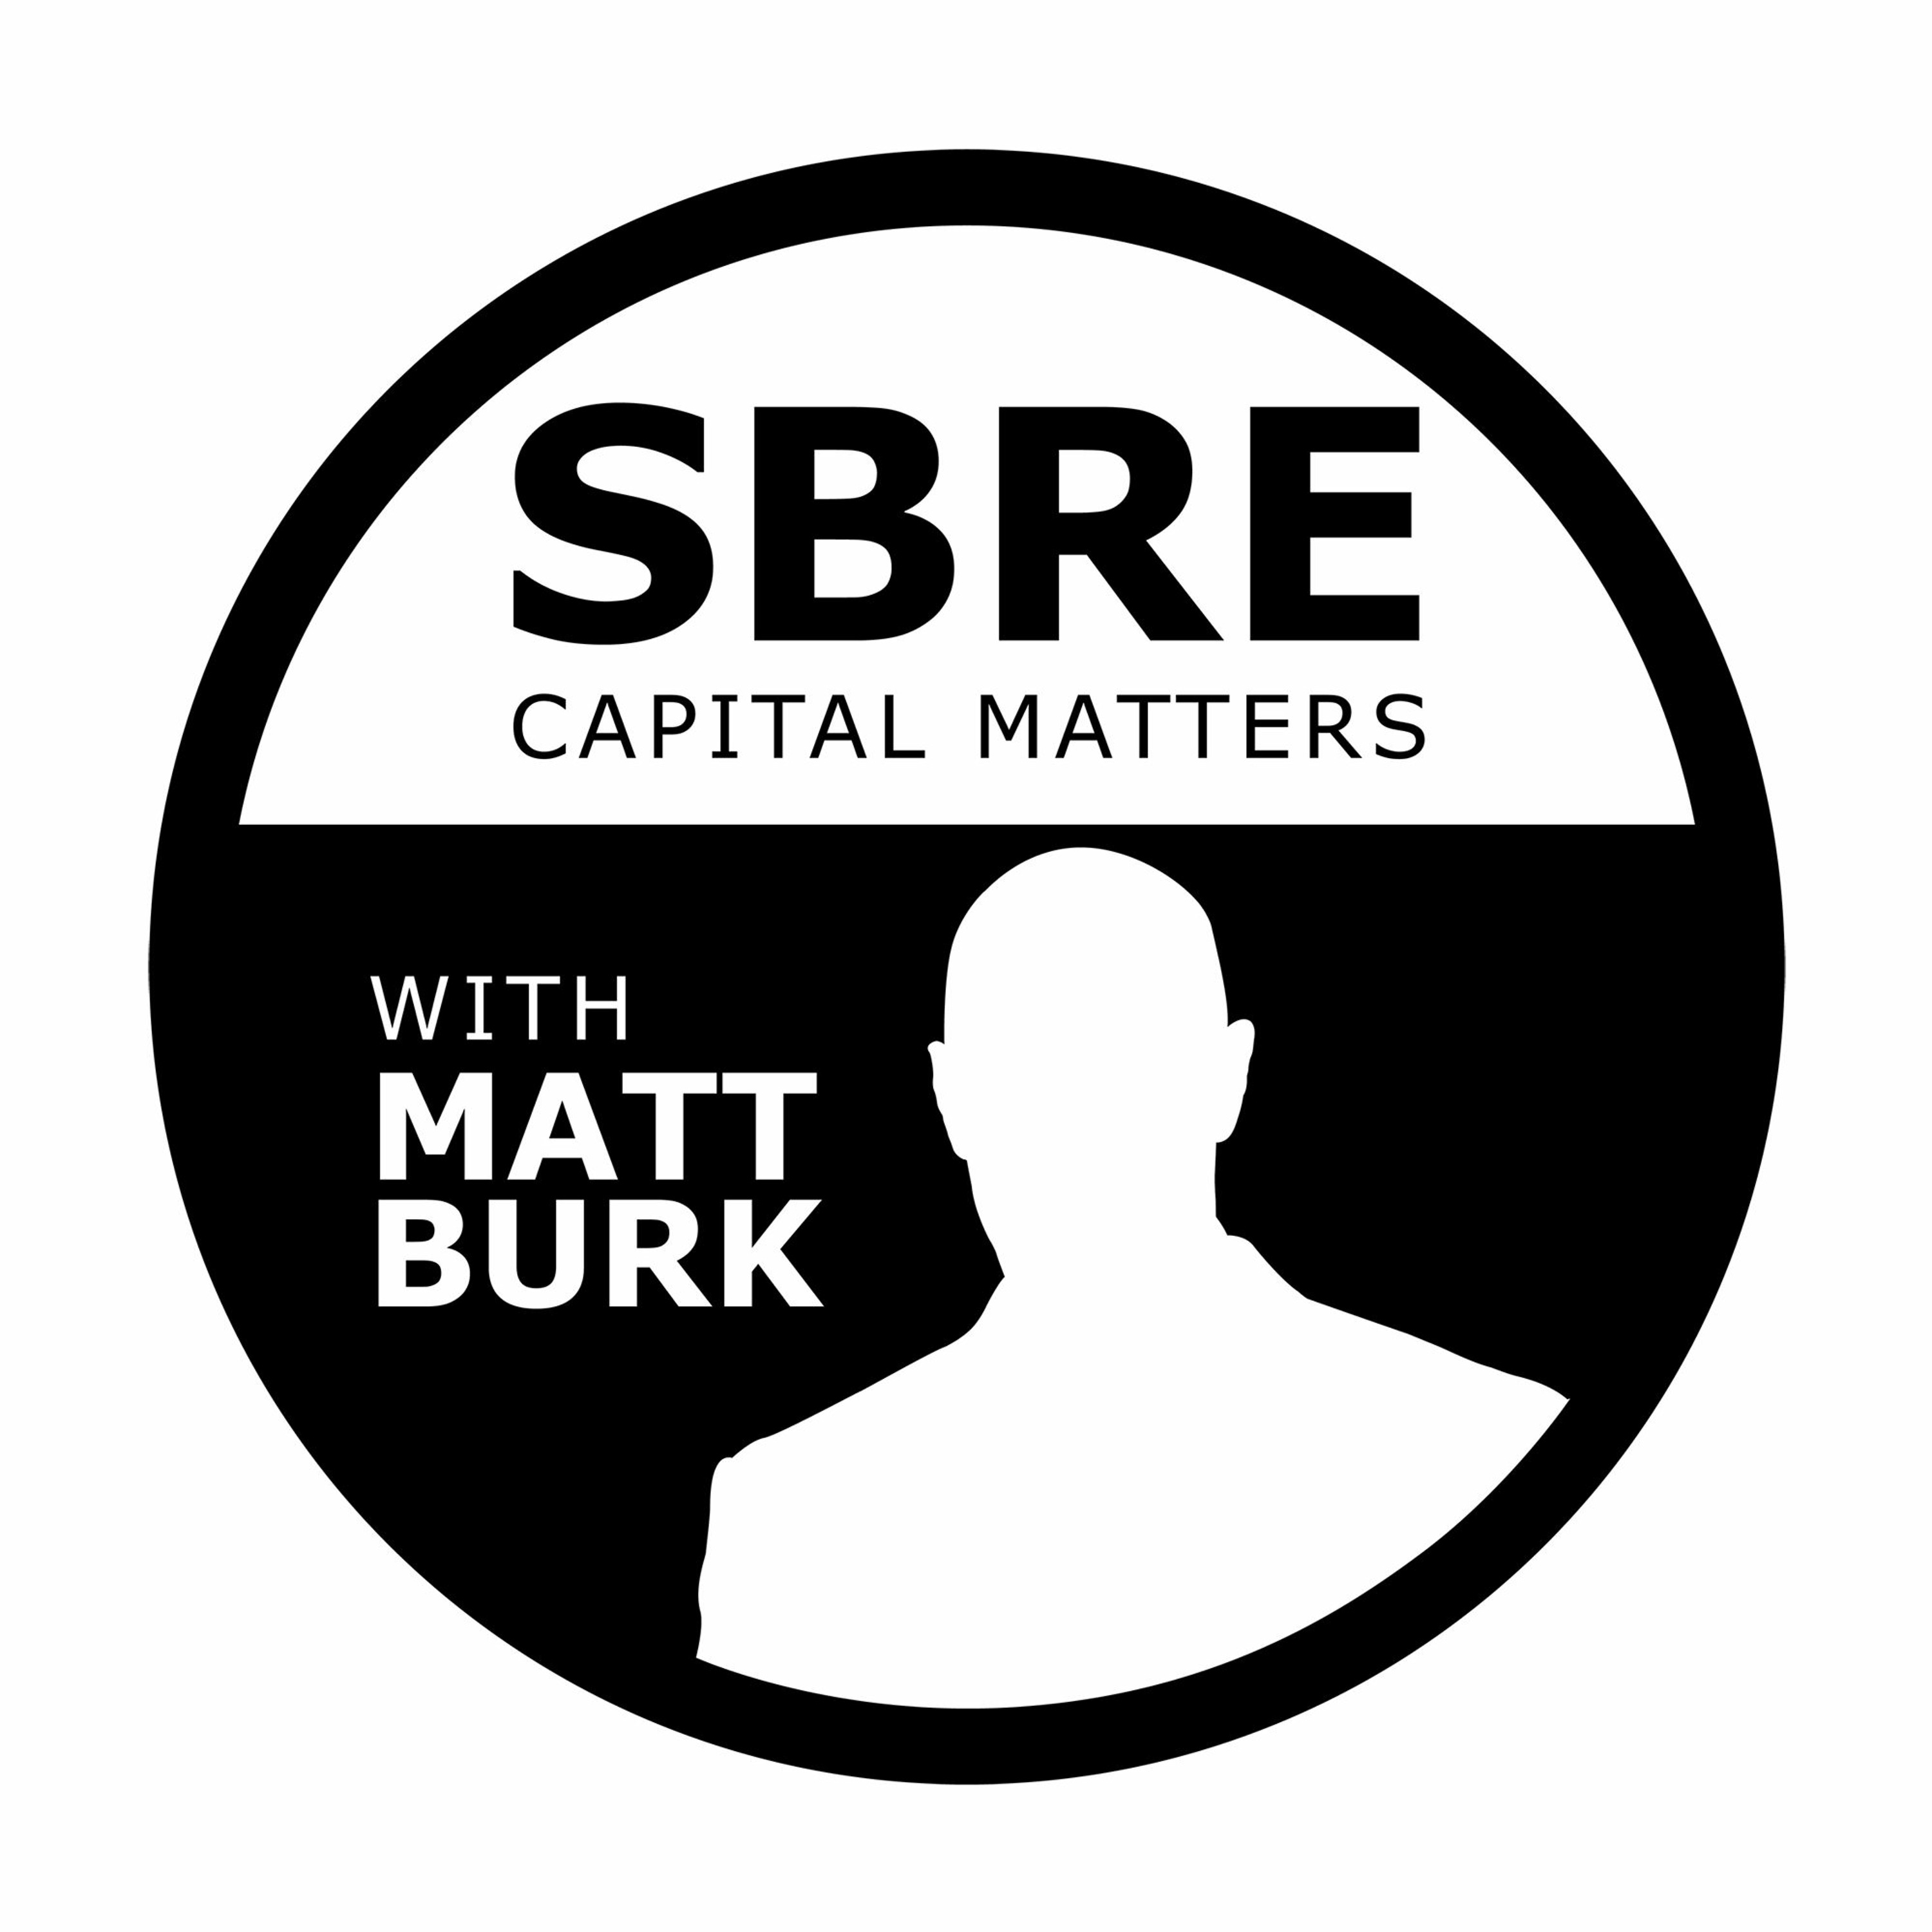 SBRE Capital Matters With Matt Burk SHOW #9 12/13/17